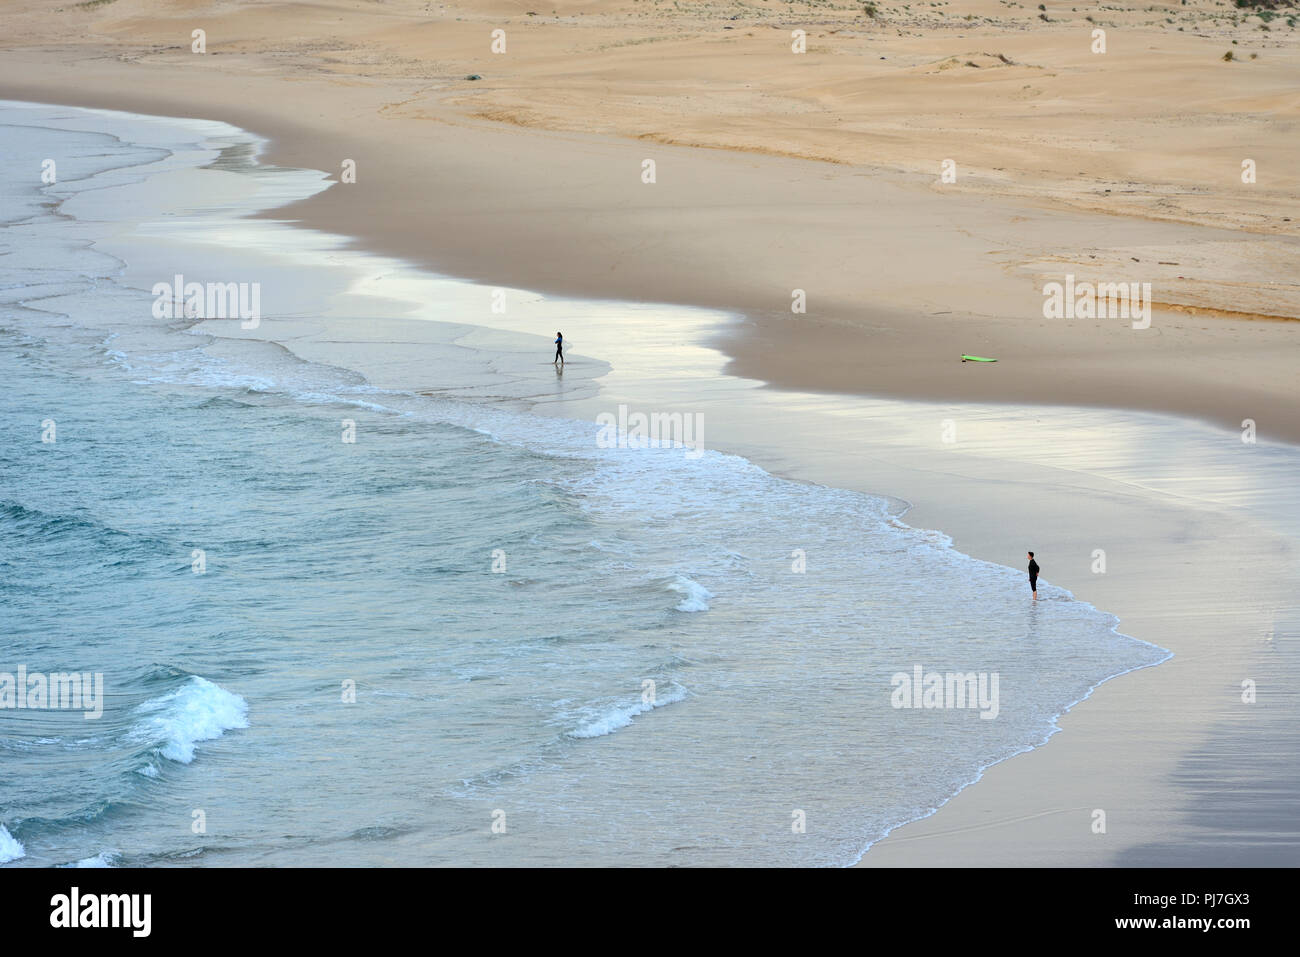 Praia da Bordeira (Bordeira Strand). Parque Natural do Sudoeste Alentejano e Costa Vicentina. Algarve, Portugal Stockfoto